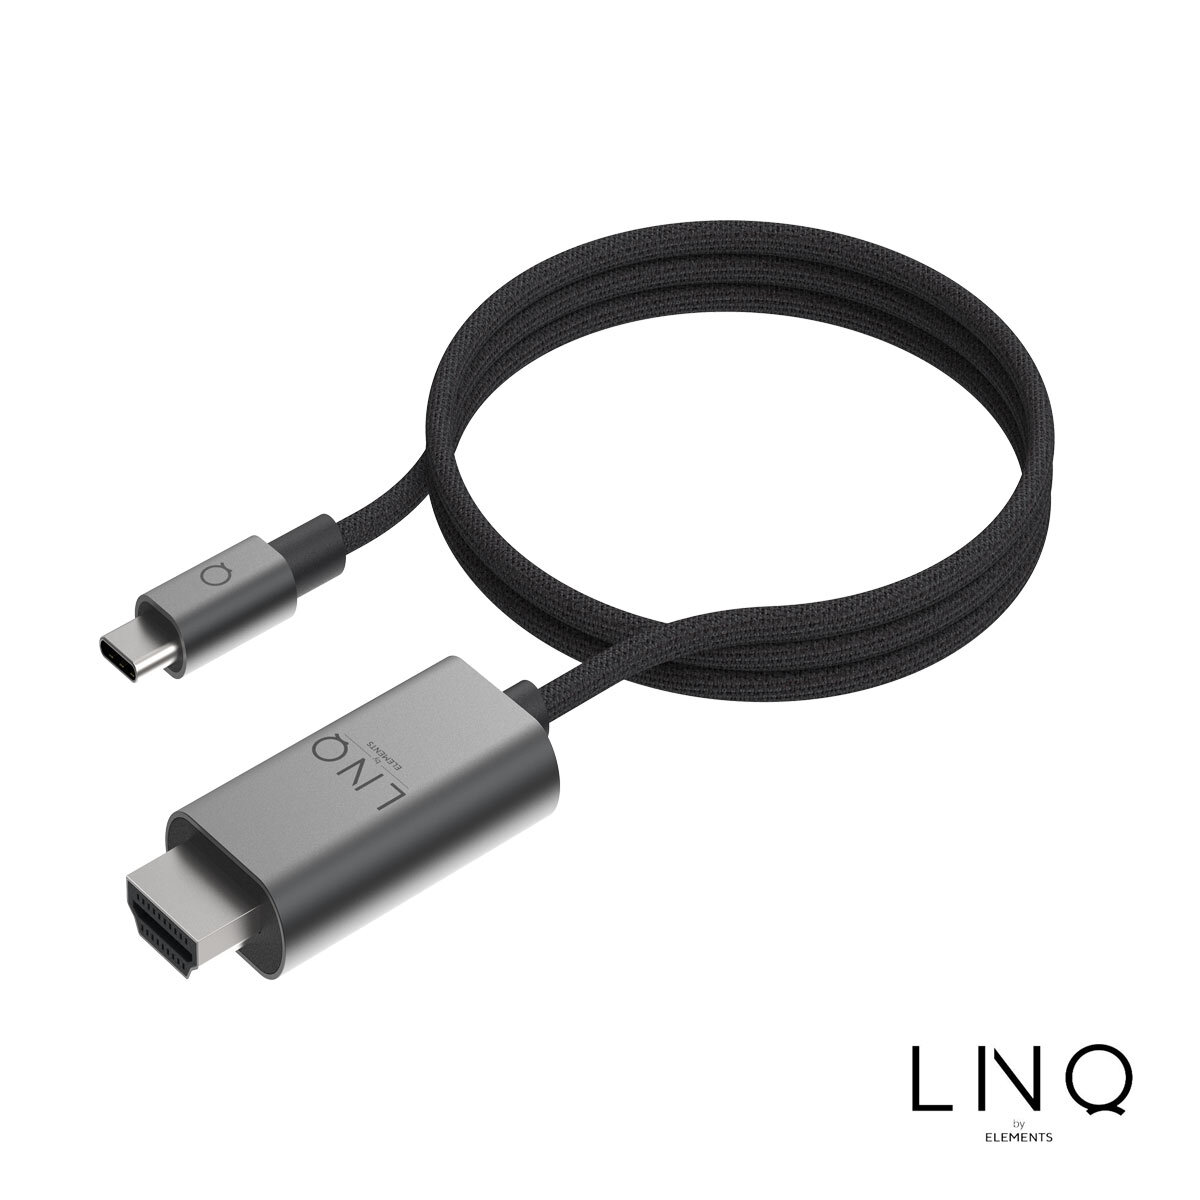 LINQ 8K/60Hz PRO HDMI - 2m | Costco UK